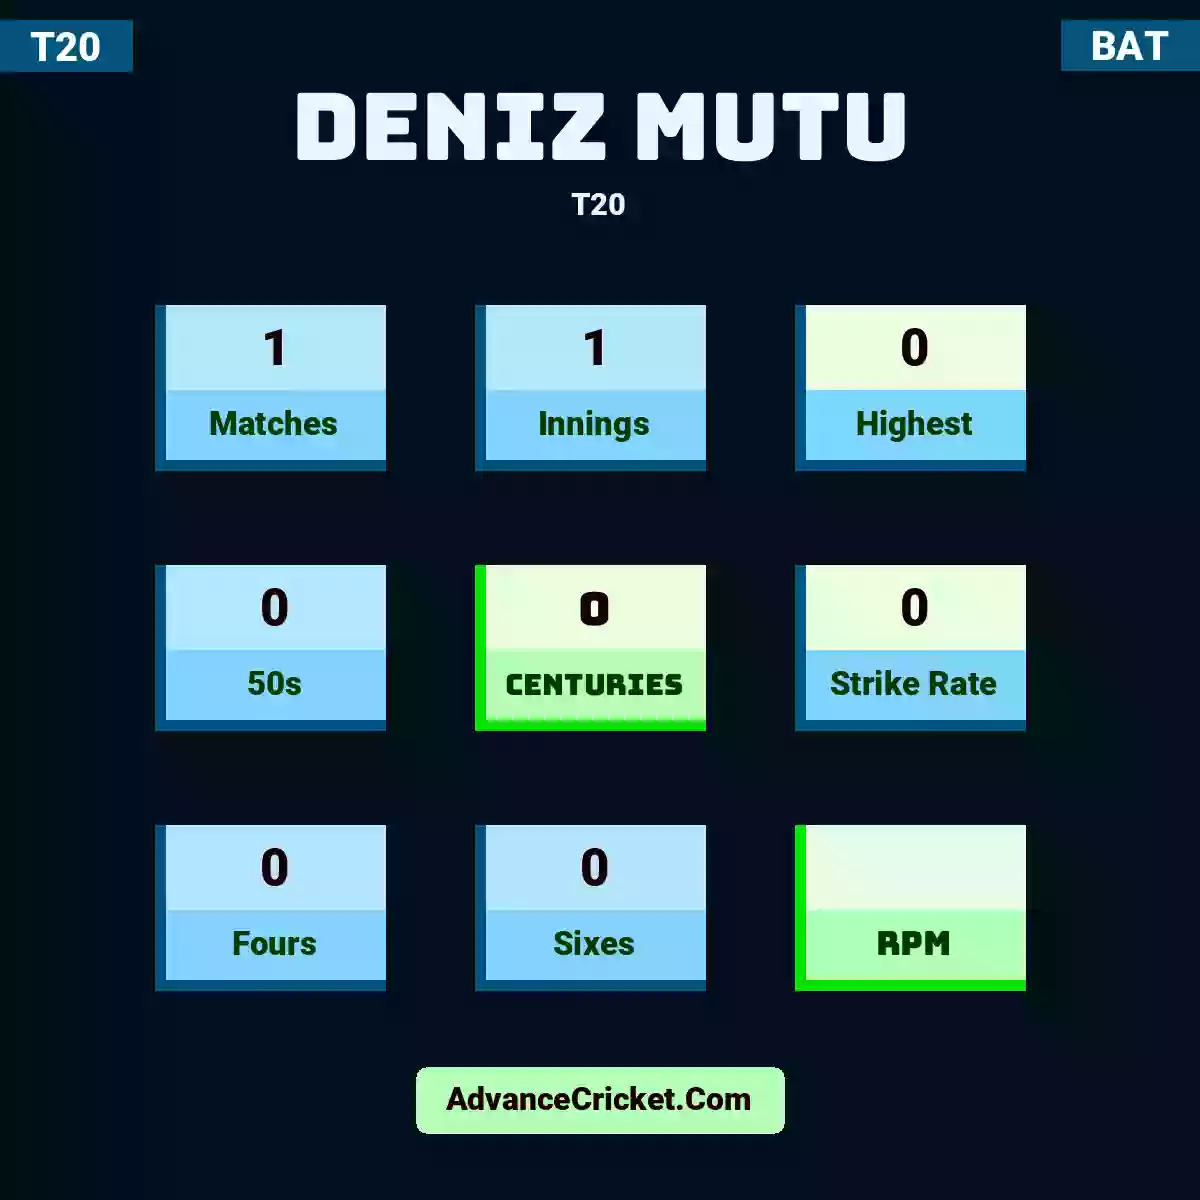 Deniz Mutu T20 , Deniz Mutu played 1 matches, scored 0 runs as highest, 0 half-centuries, and 0 centuries, with a strike rate of 0. D.Mutu hit 0 fours and 0 sixes.